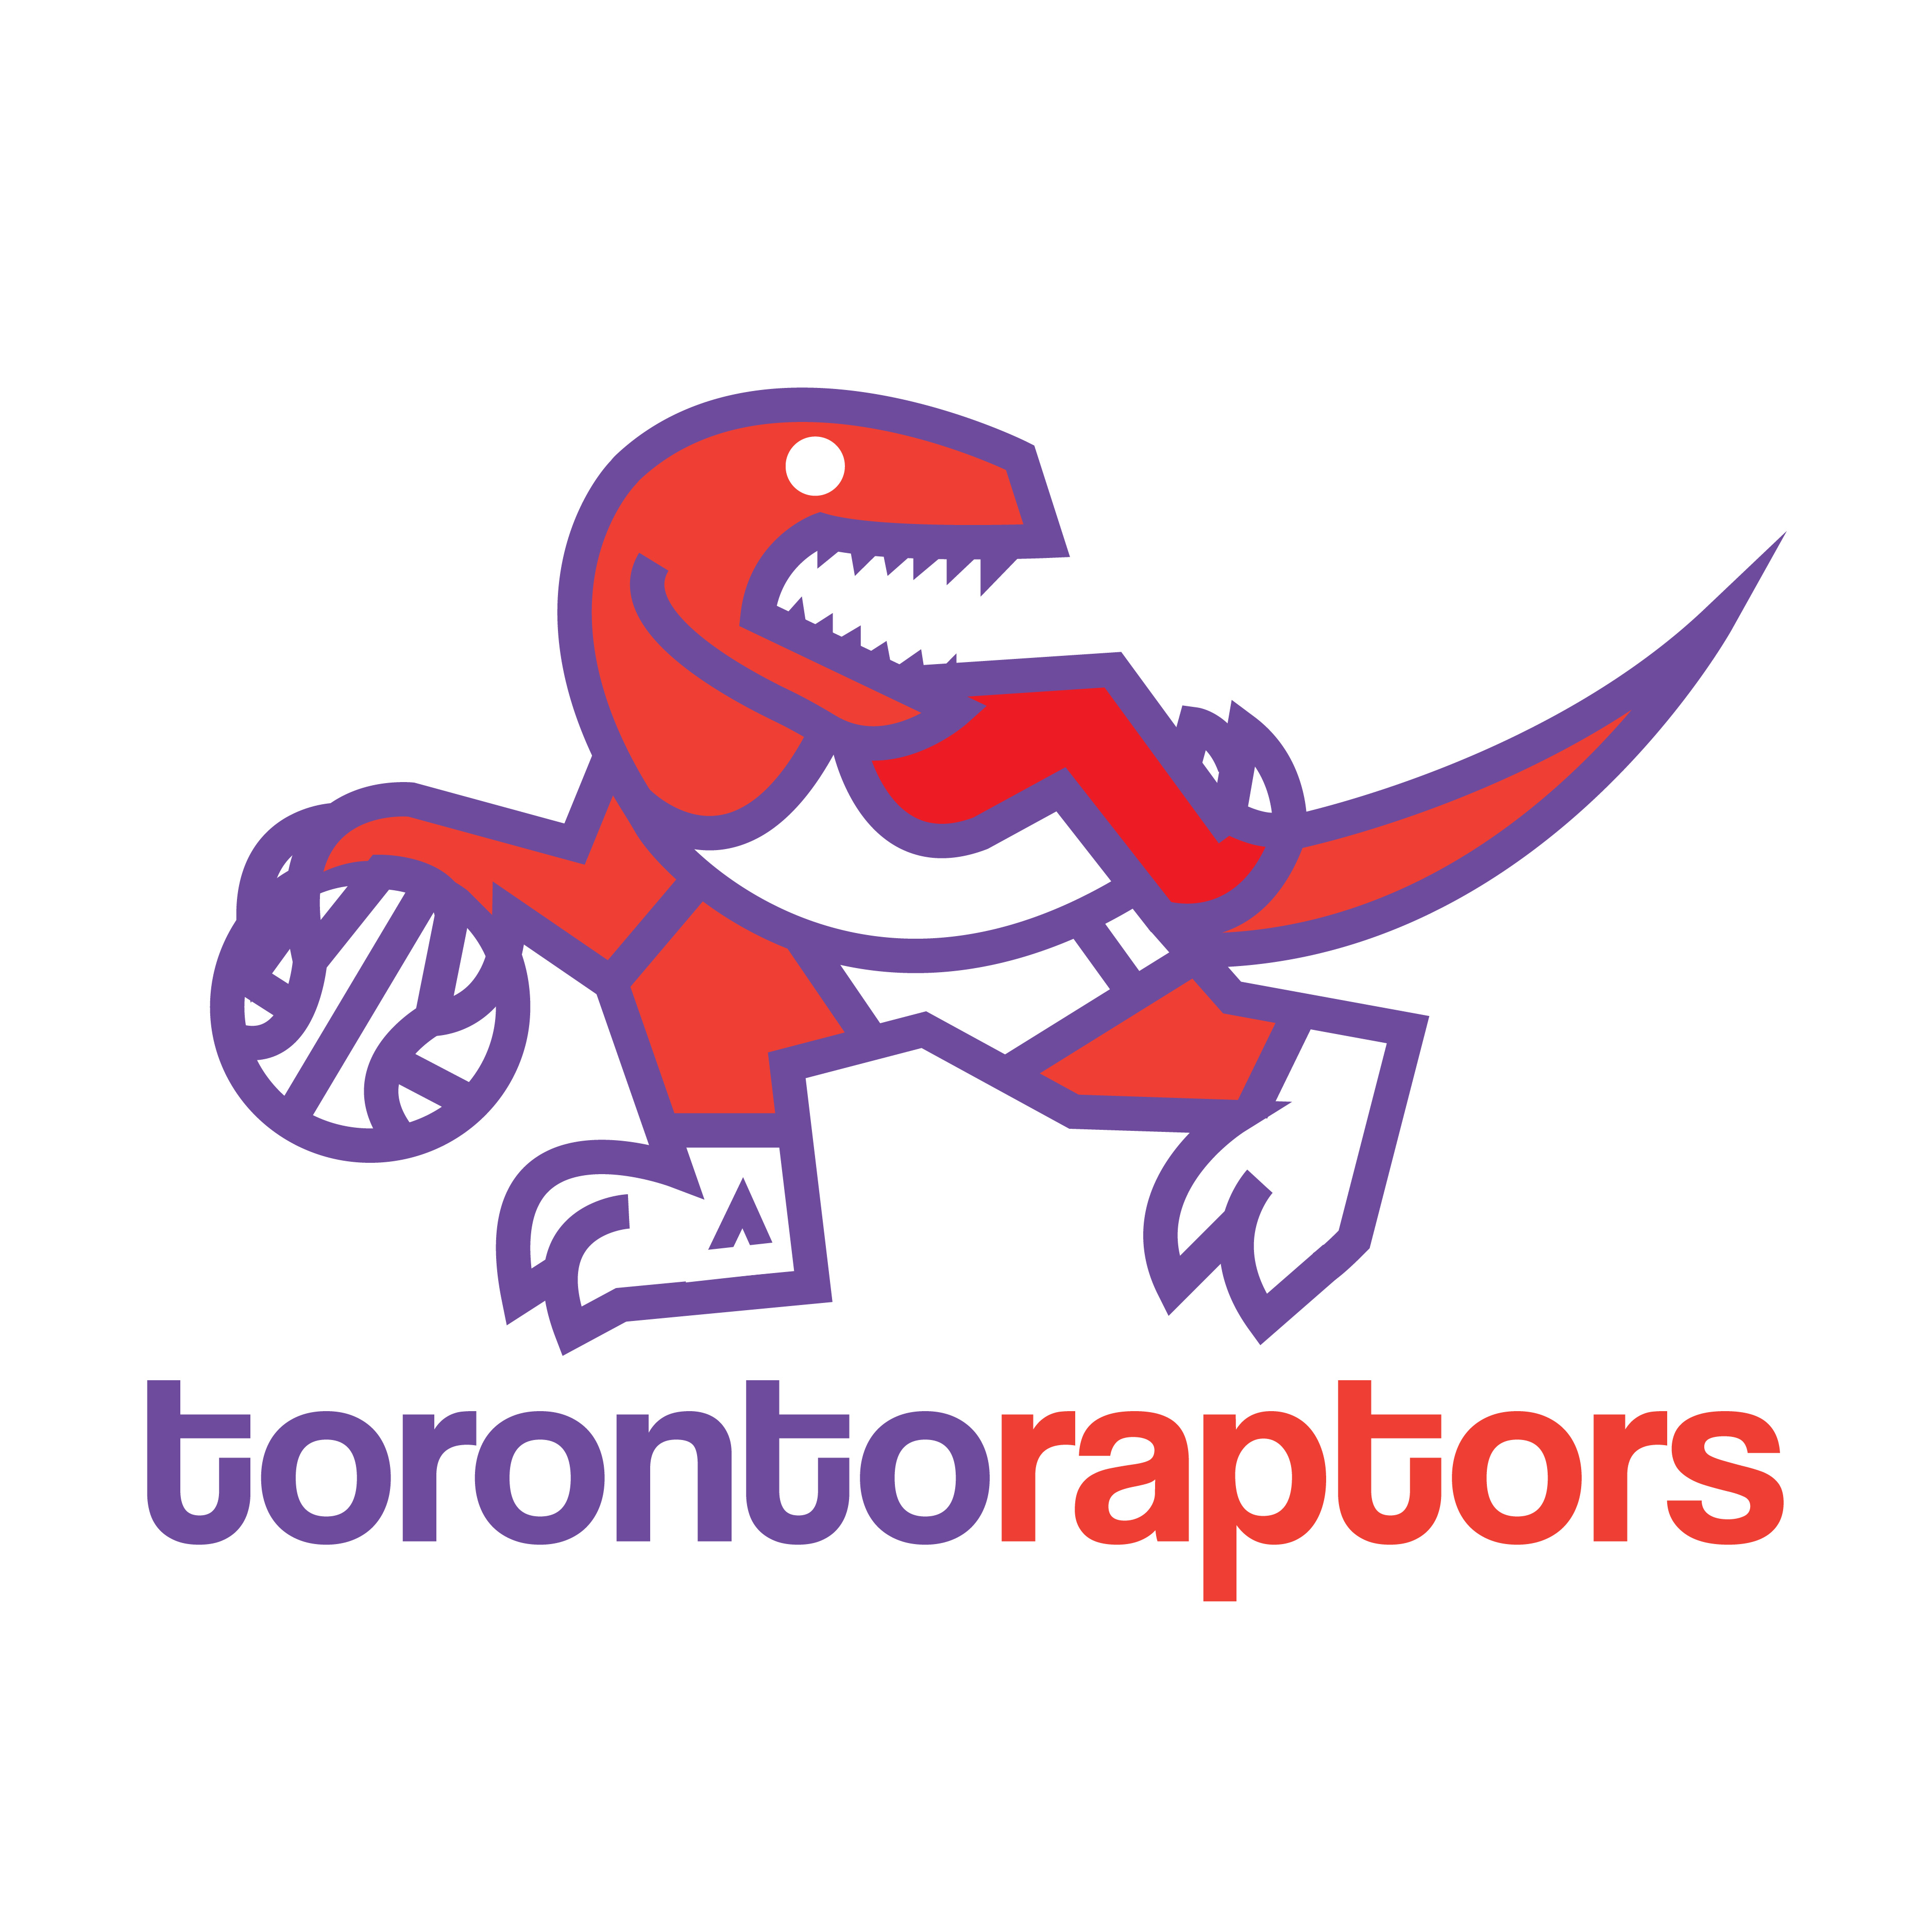 1970's Toronto Raptors Fauxback logo design by logo designer Kenion Harvey Design for your inspiration and for the worlds largest logo competition